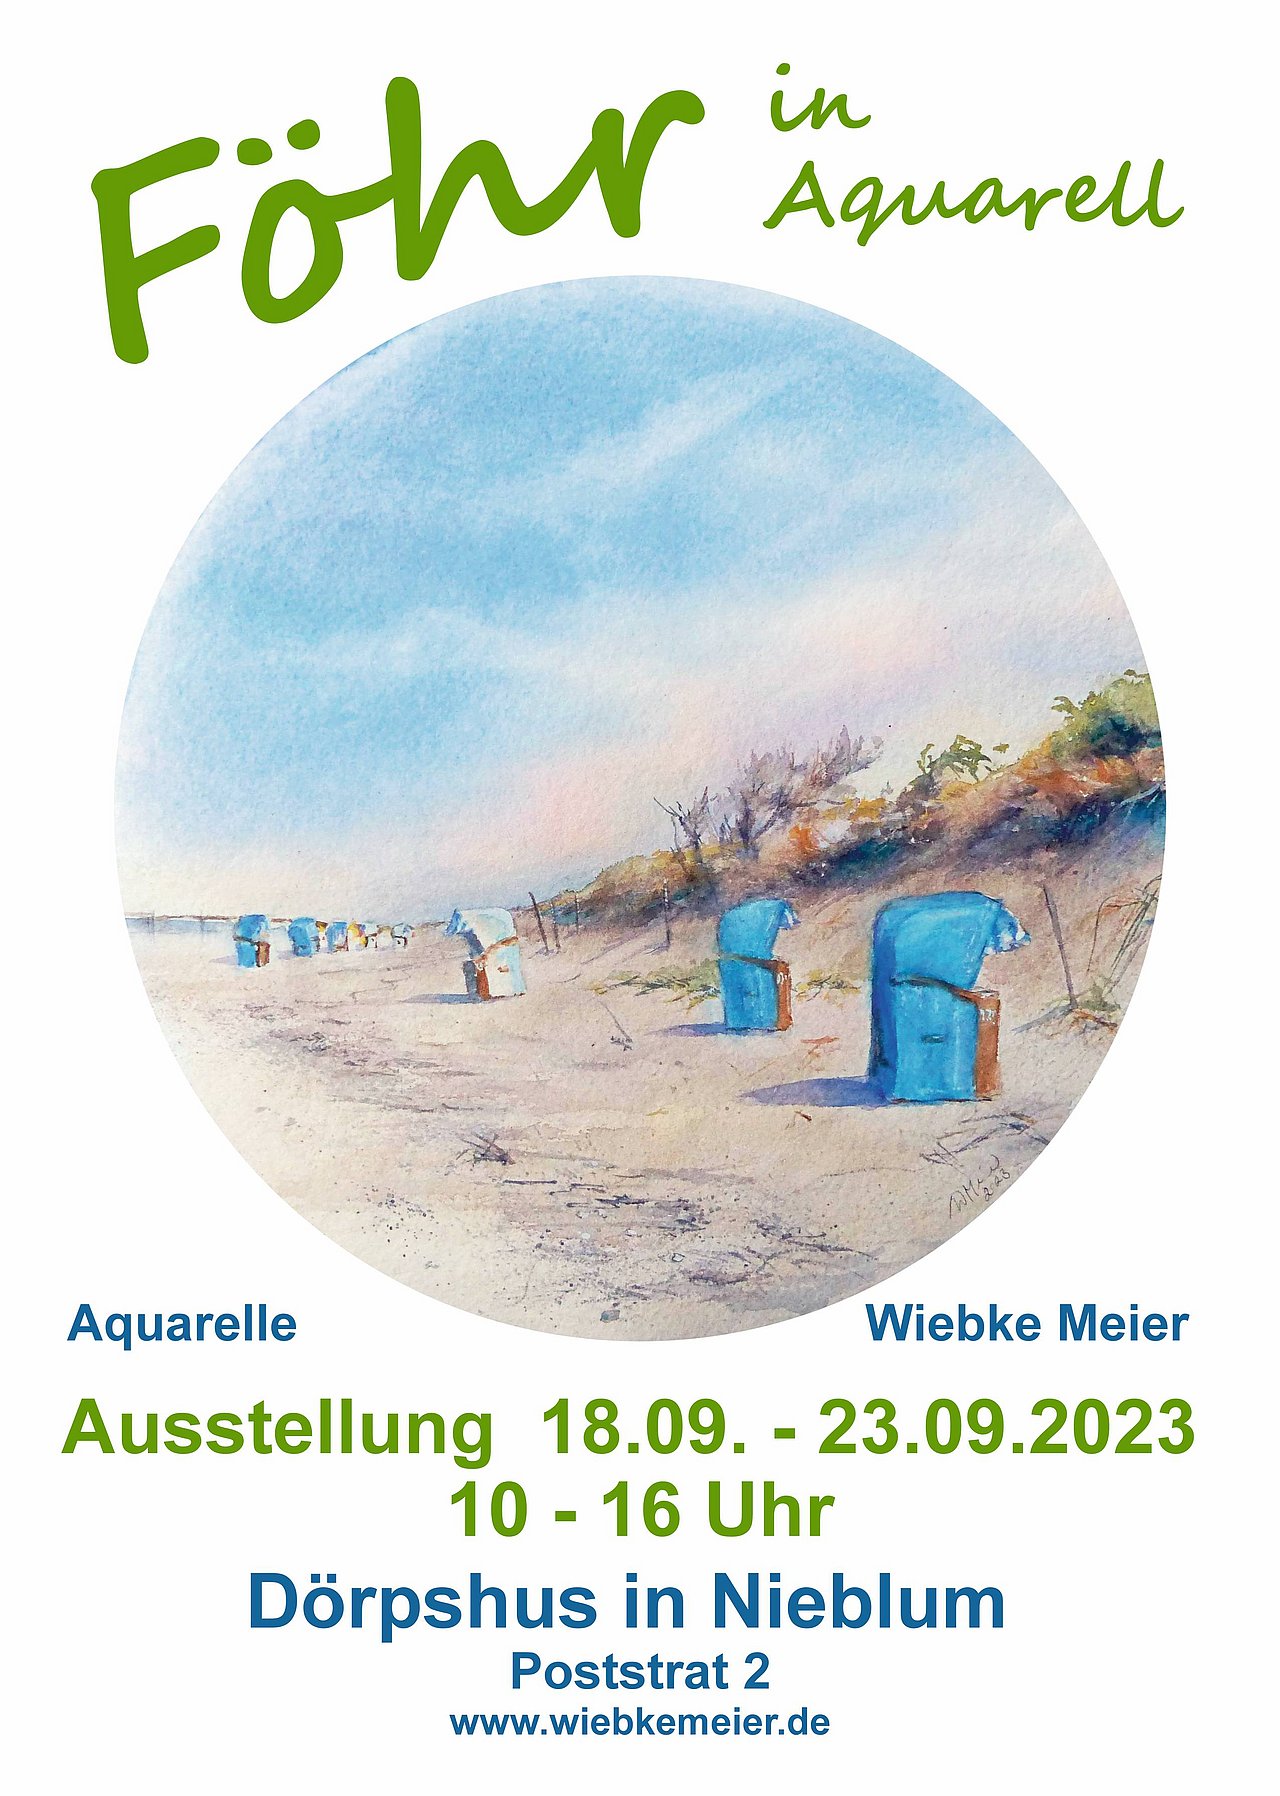 Ausstellung "Föhr in Aquarell" 23.-28.10.2023